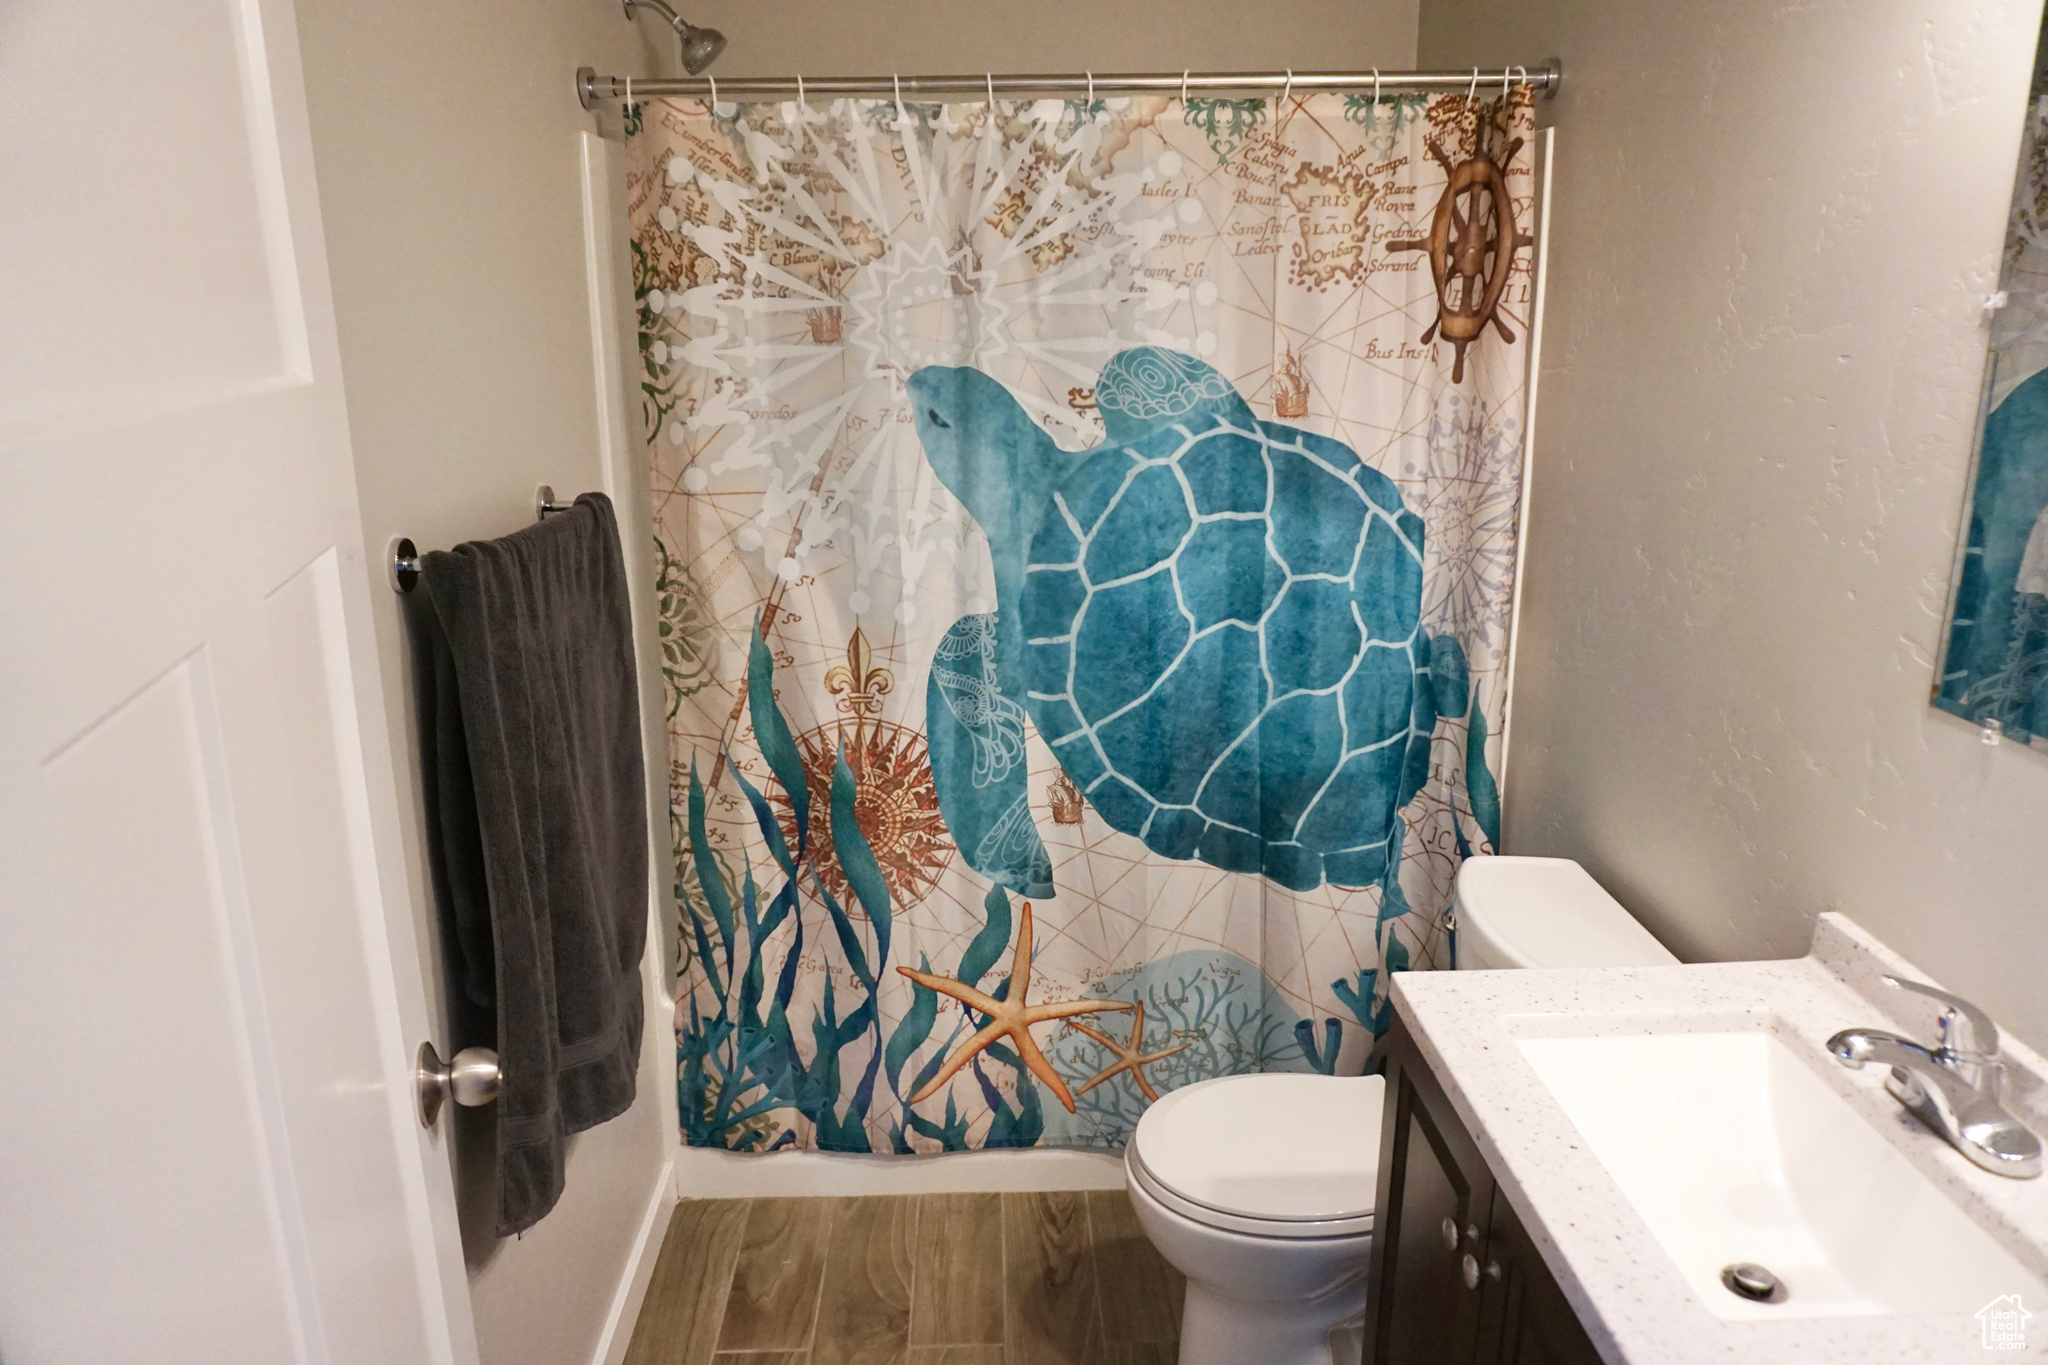 Bathroom featuring tile flooring, vanity, and toilet